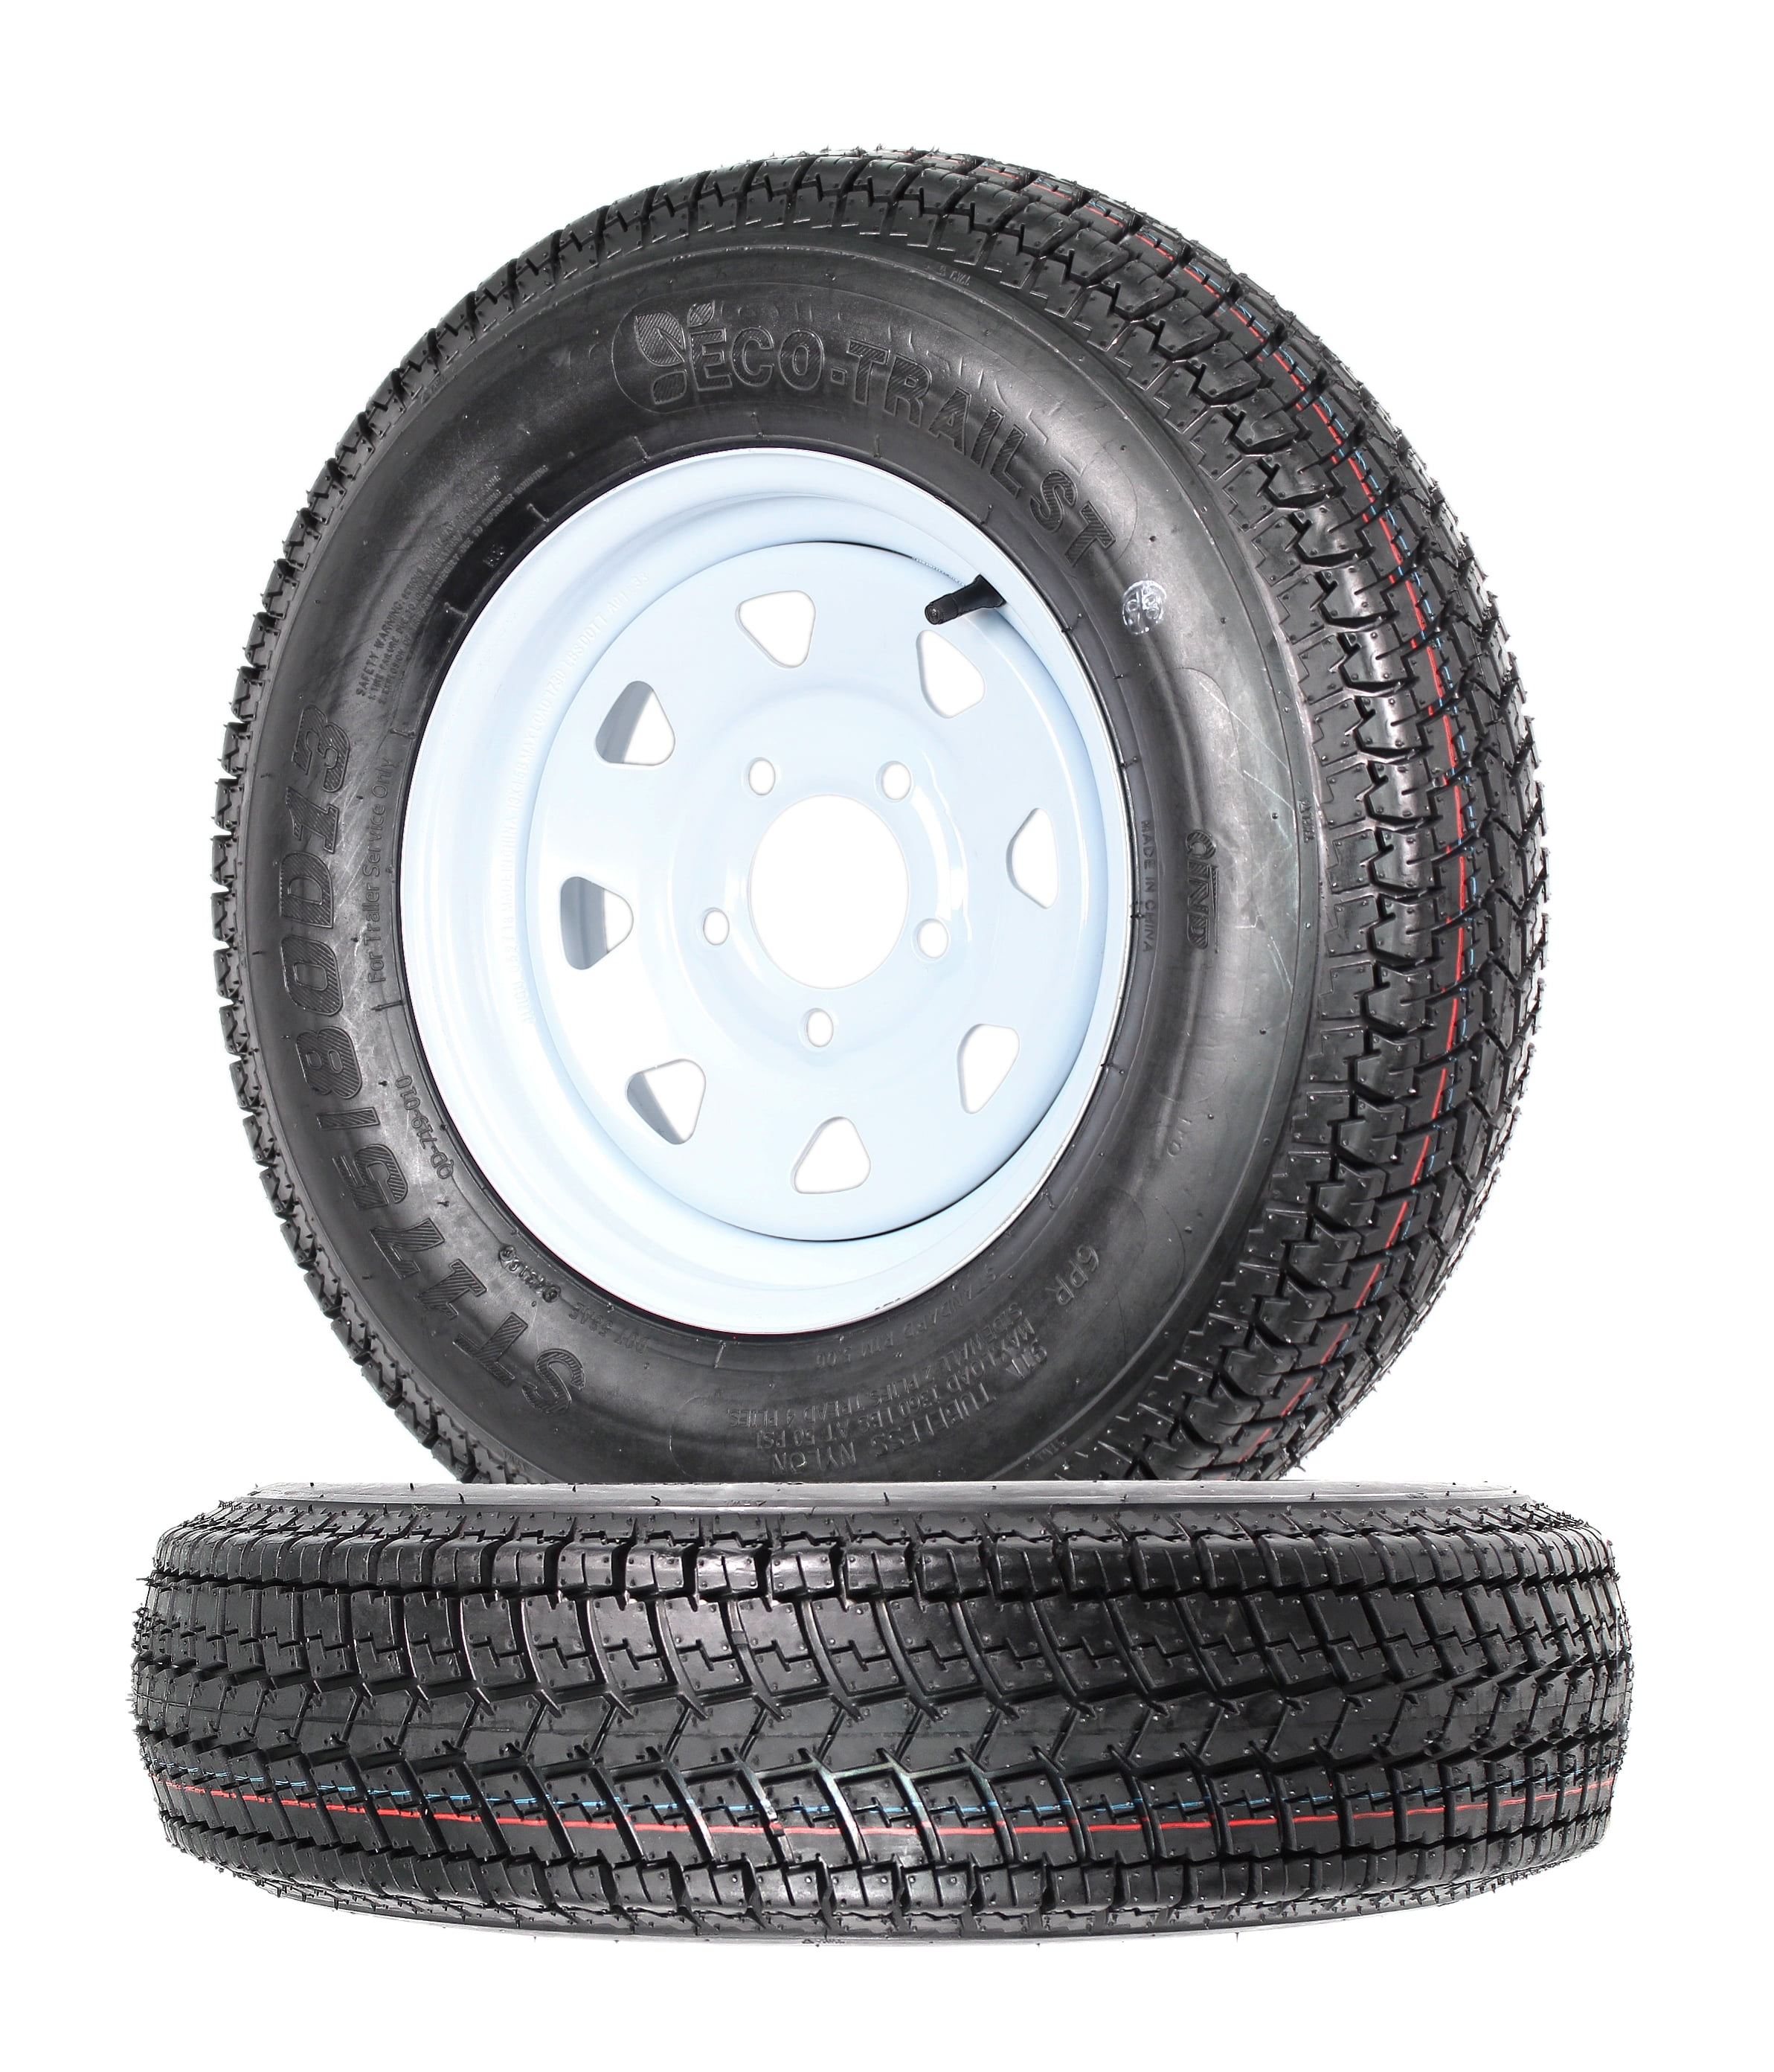 Pack of 2 Motorhot 13 Trailer Wheel & Tire 175/80D13 LRC ET Bias Trailer Tires 5 Hole Black Steel Ring 